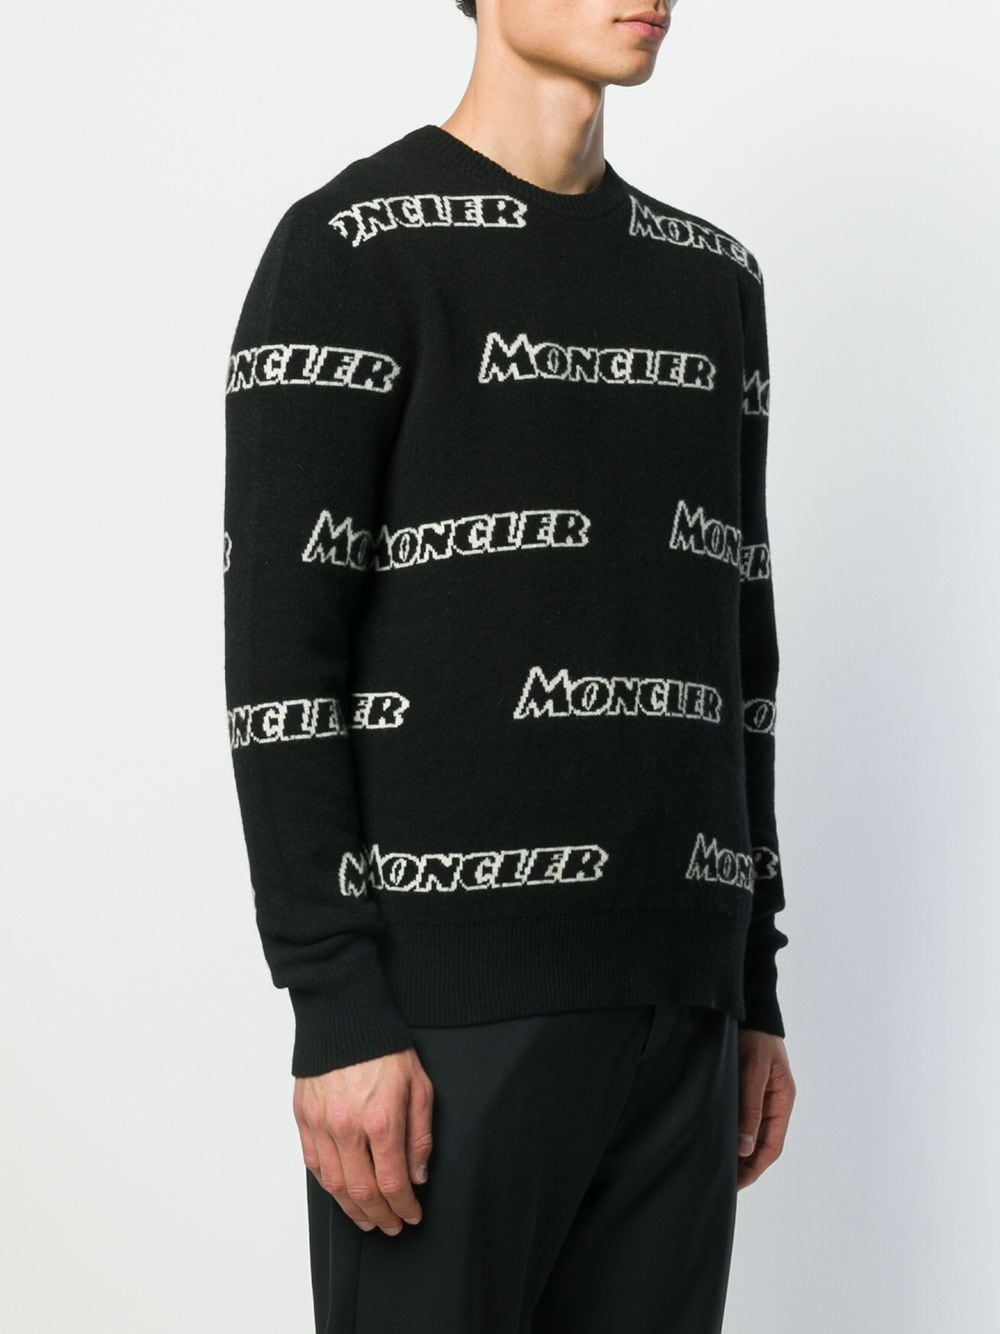 фото Moncler свитер вязки интарсия с логотипом